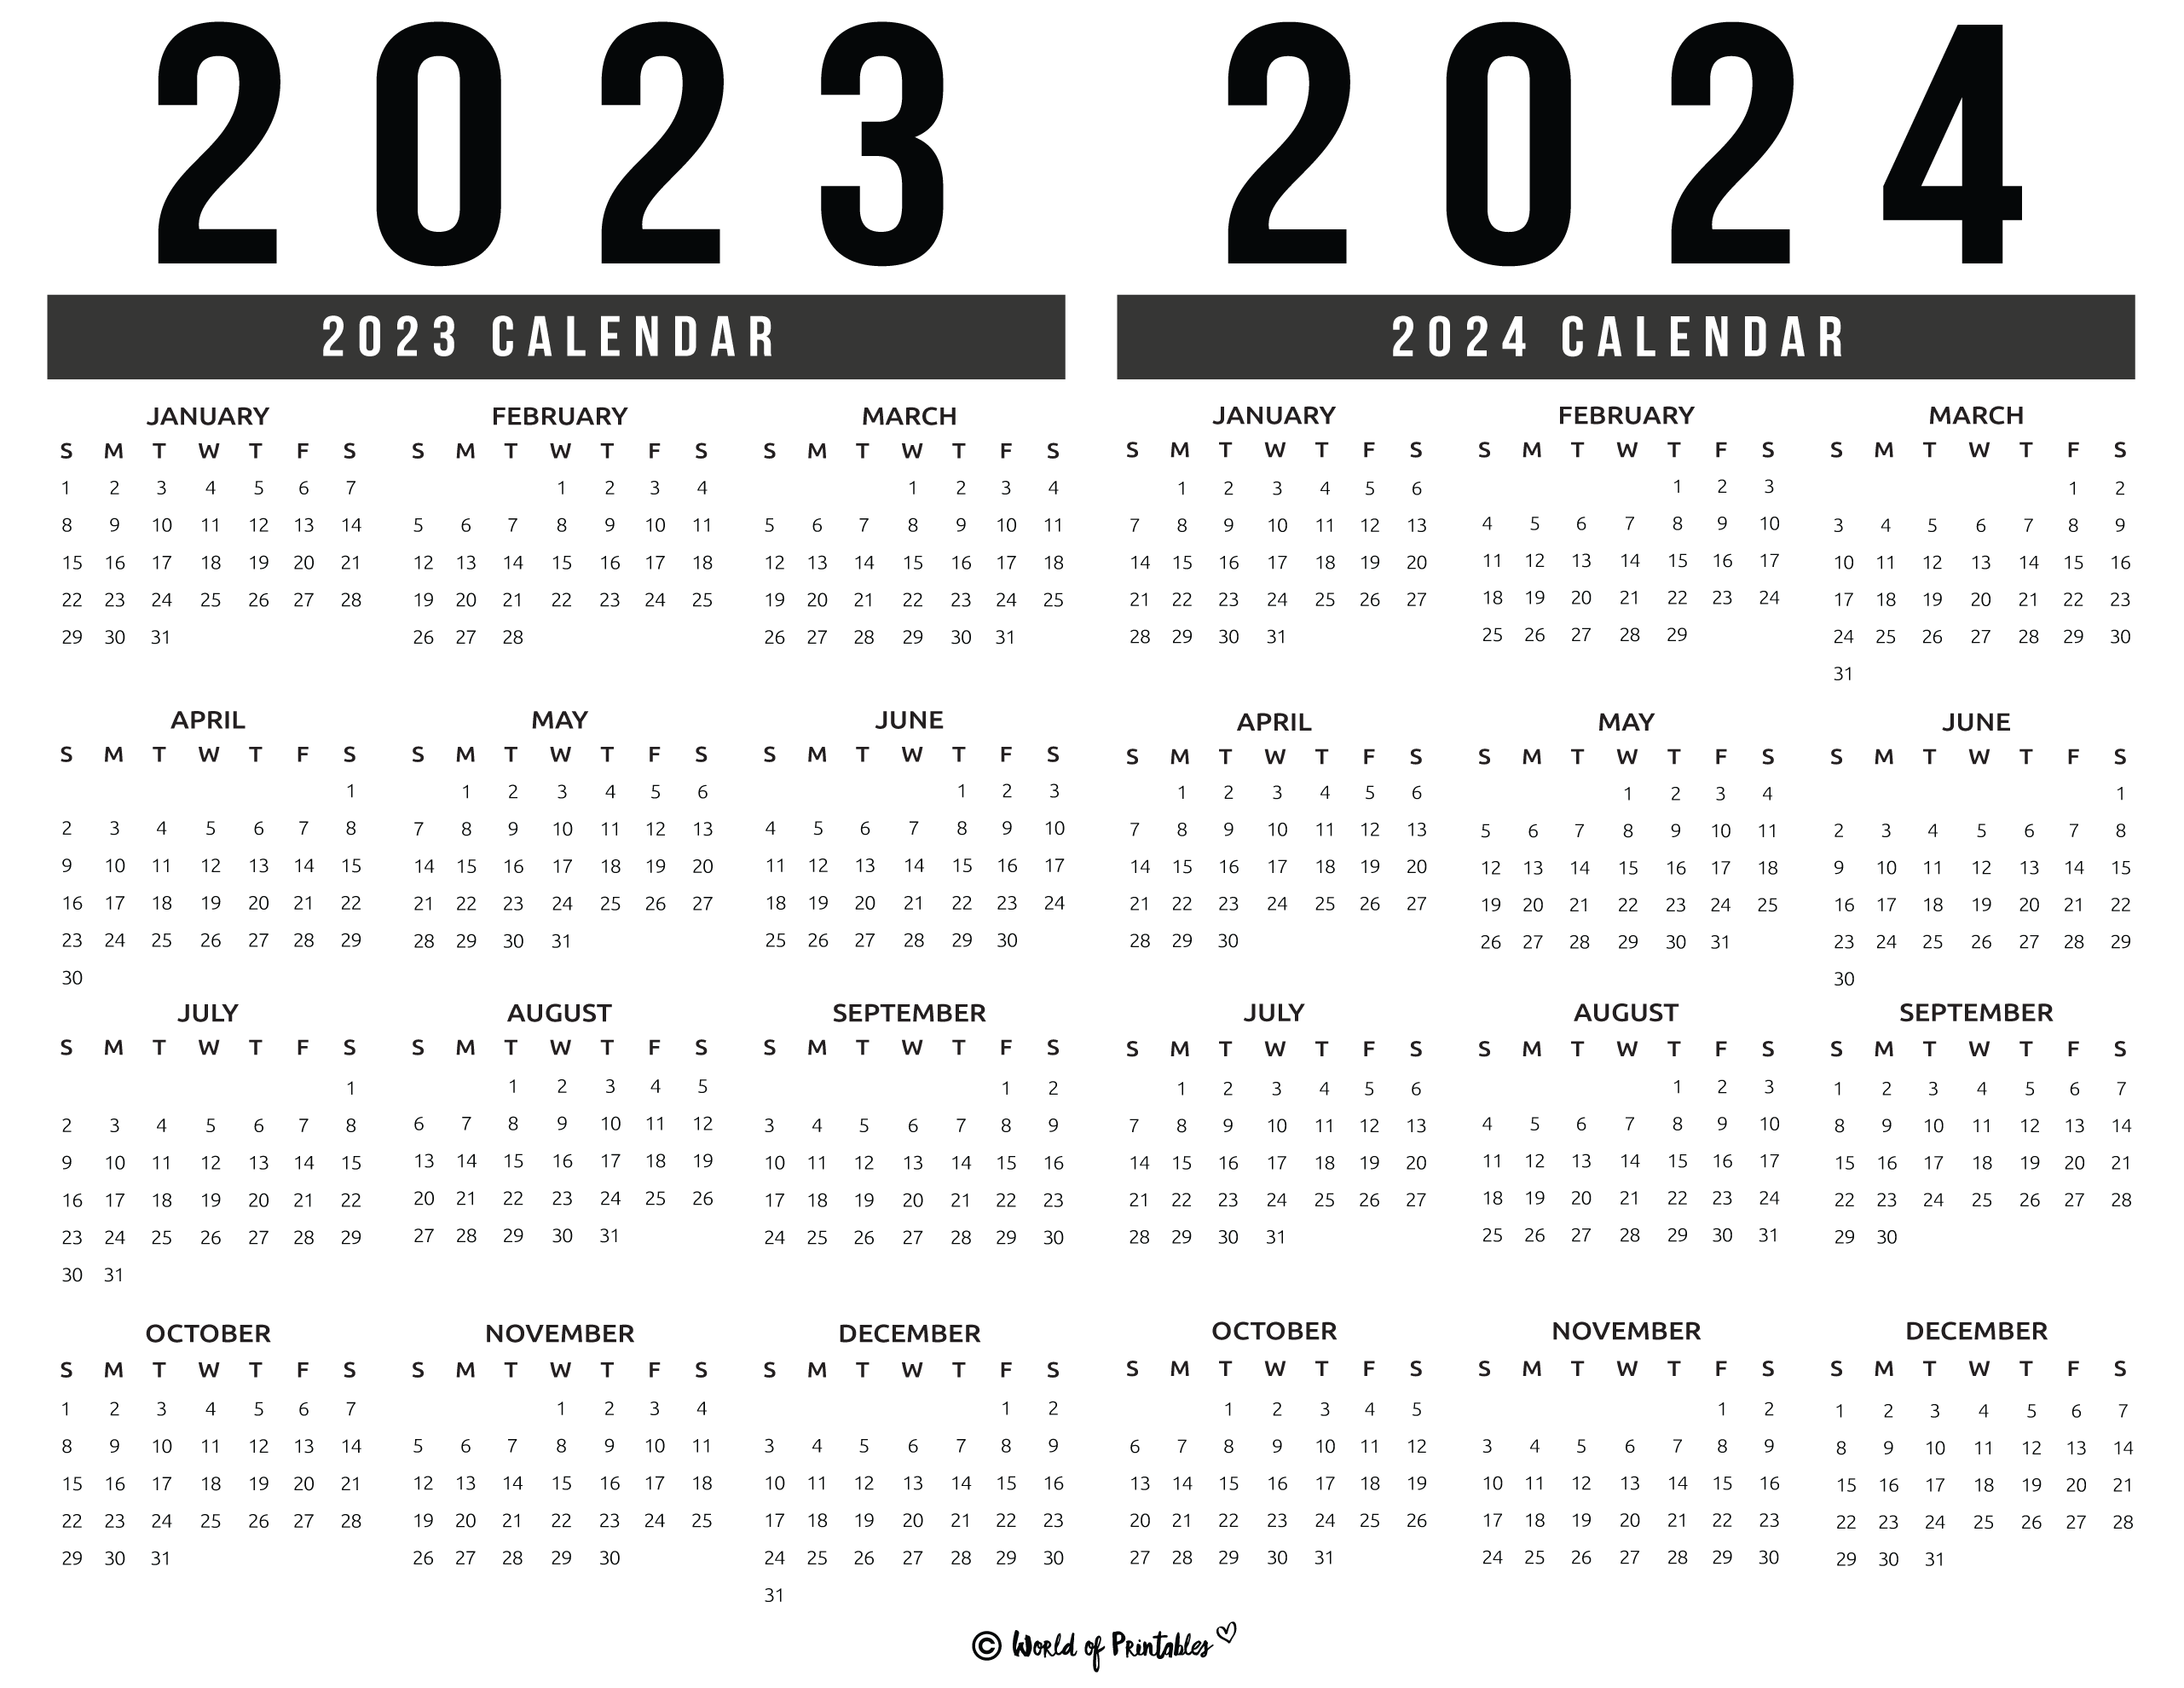 2023 2024 Calendar Free Printables - World Of Printables for Calendar 2023 And 2024 Printable